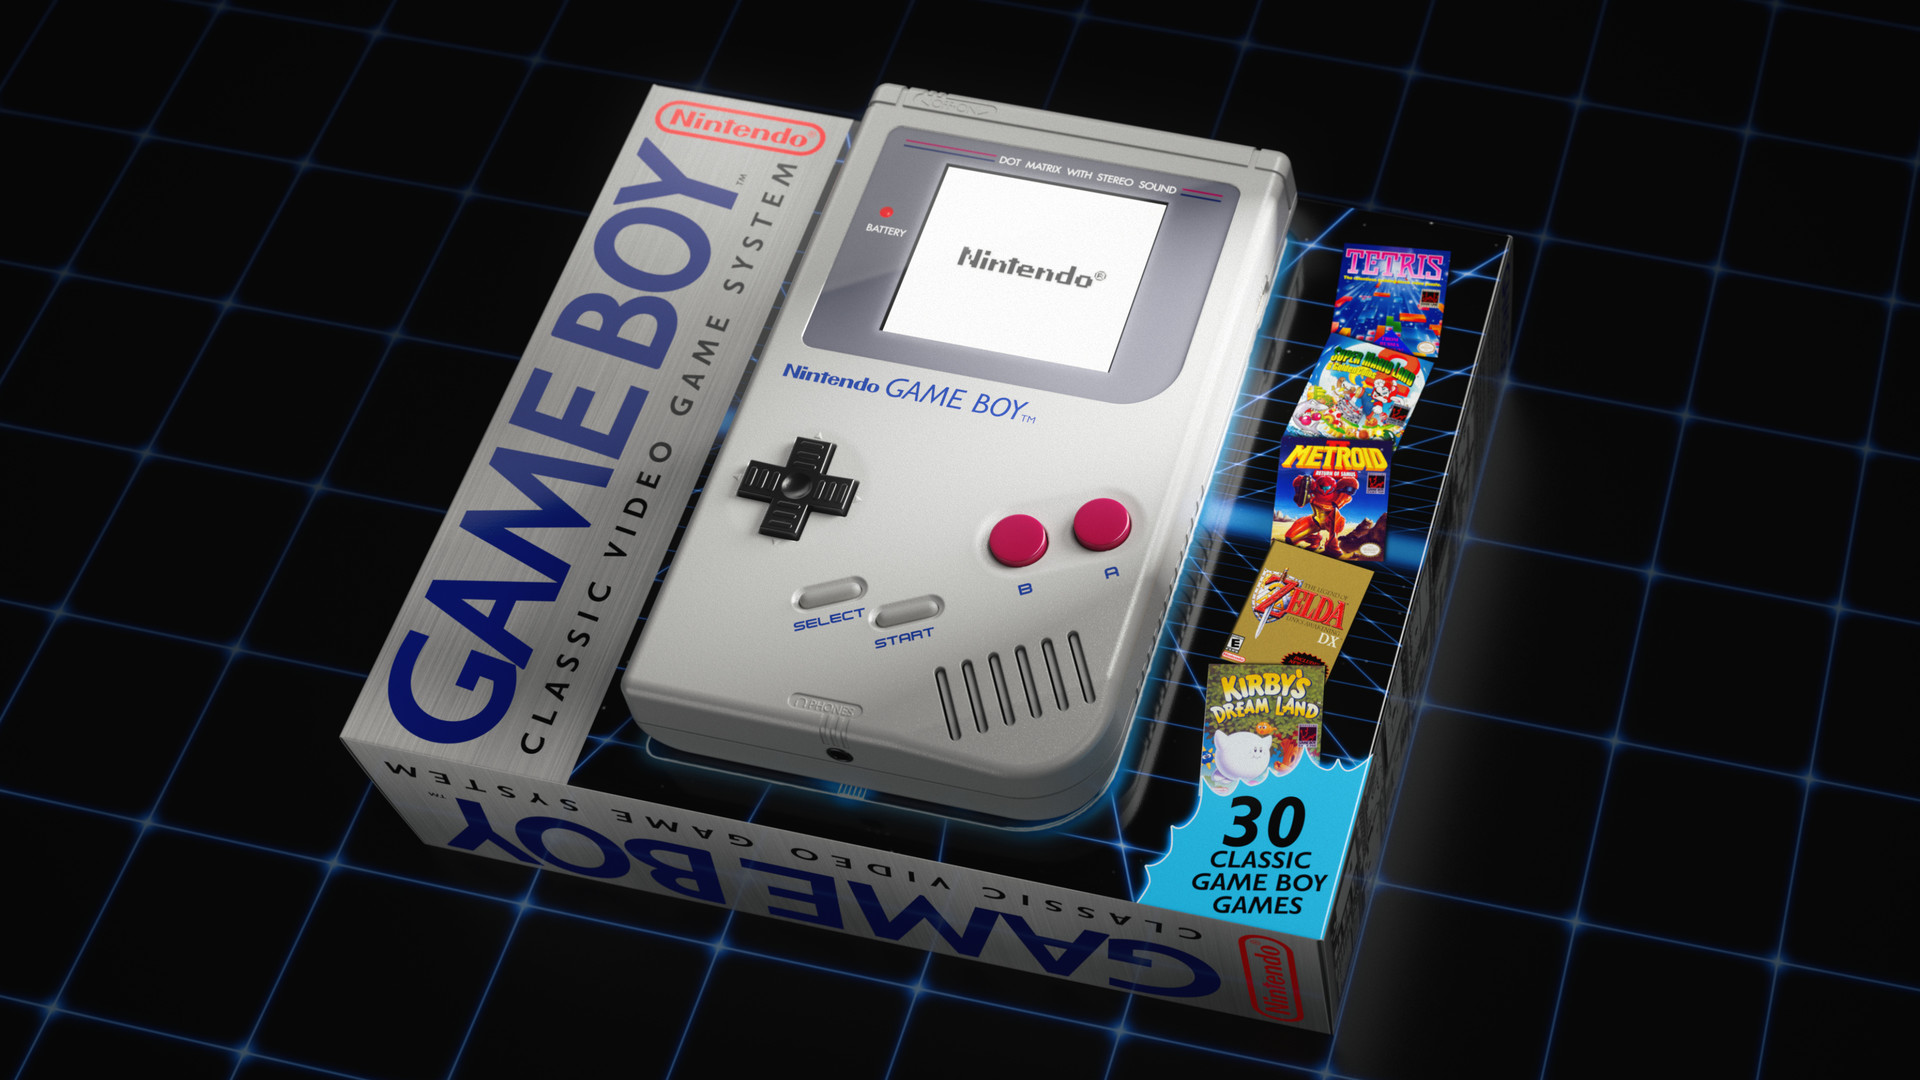 - Game Boy Classic